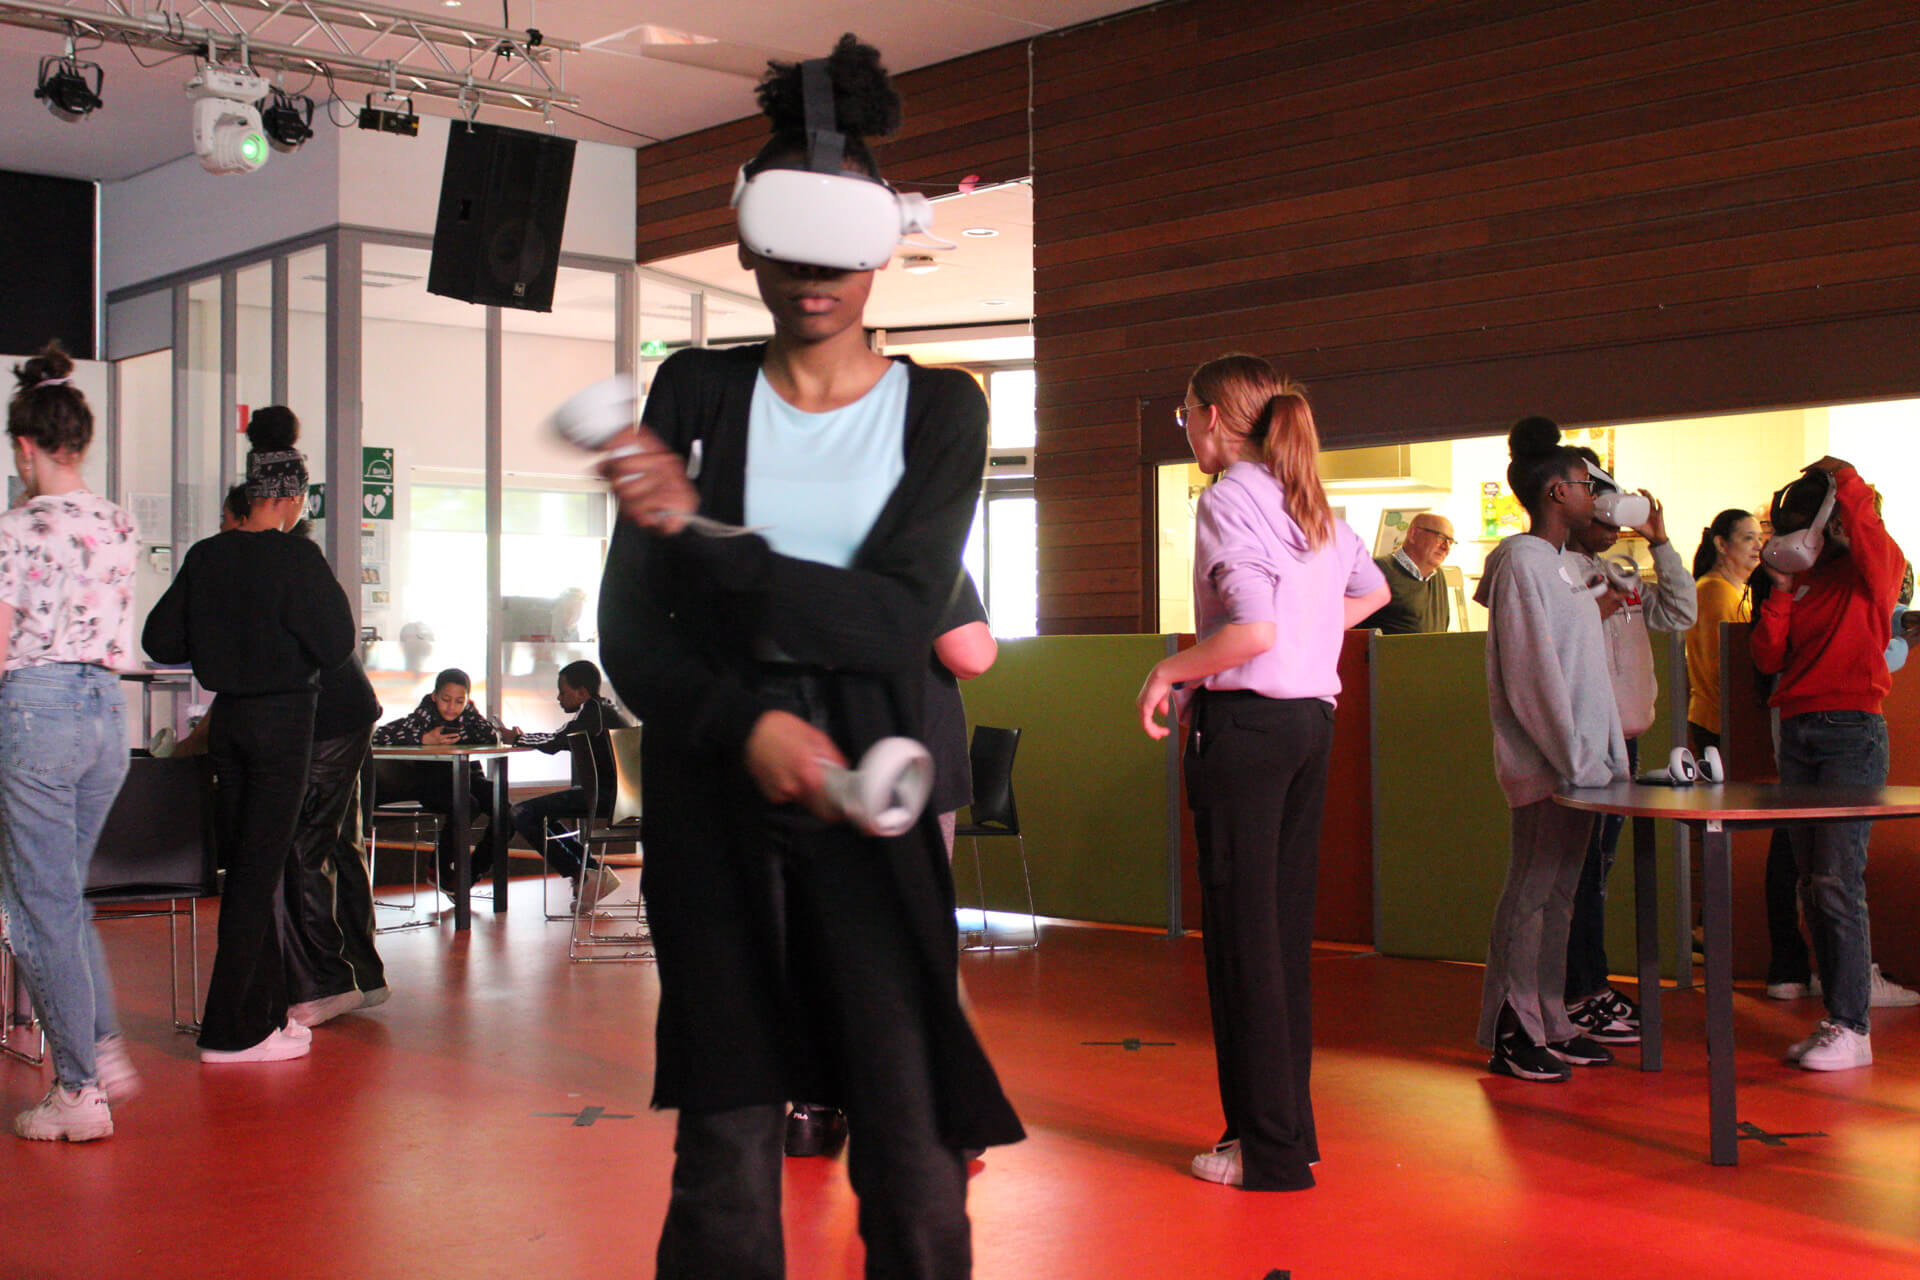 Meisje speelt Virtual Reality (VR) spel tijdens activiteitendag middelbare school